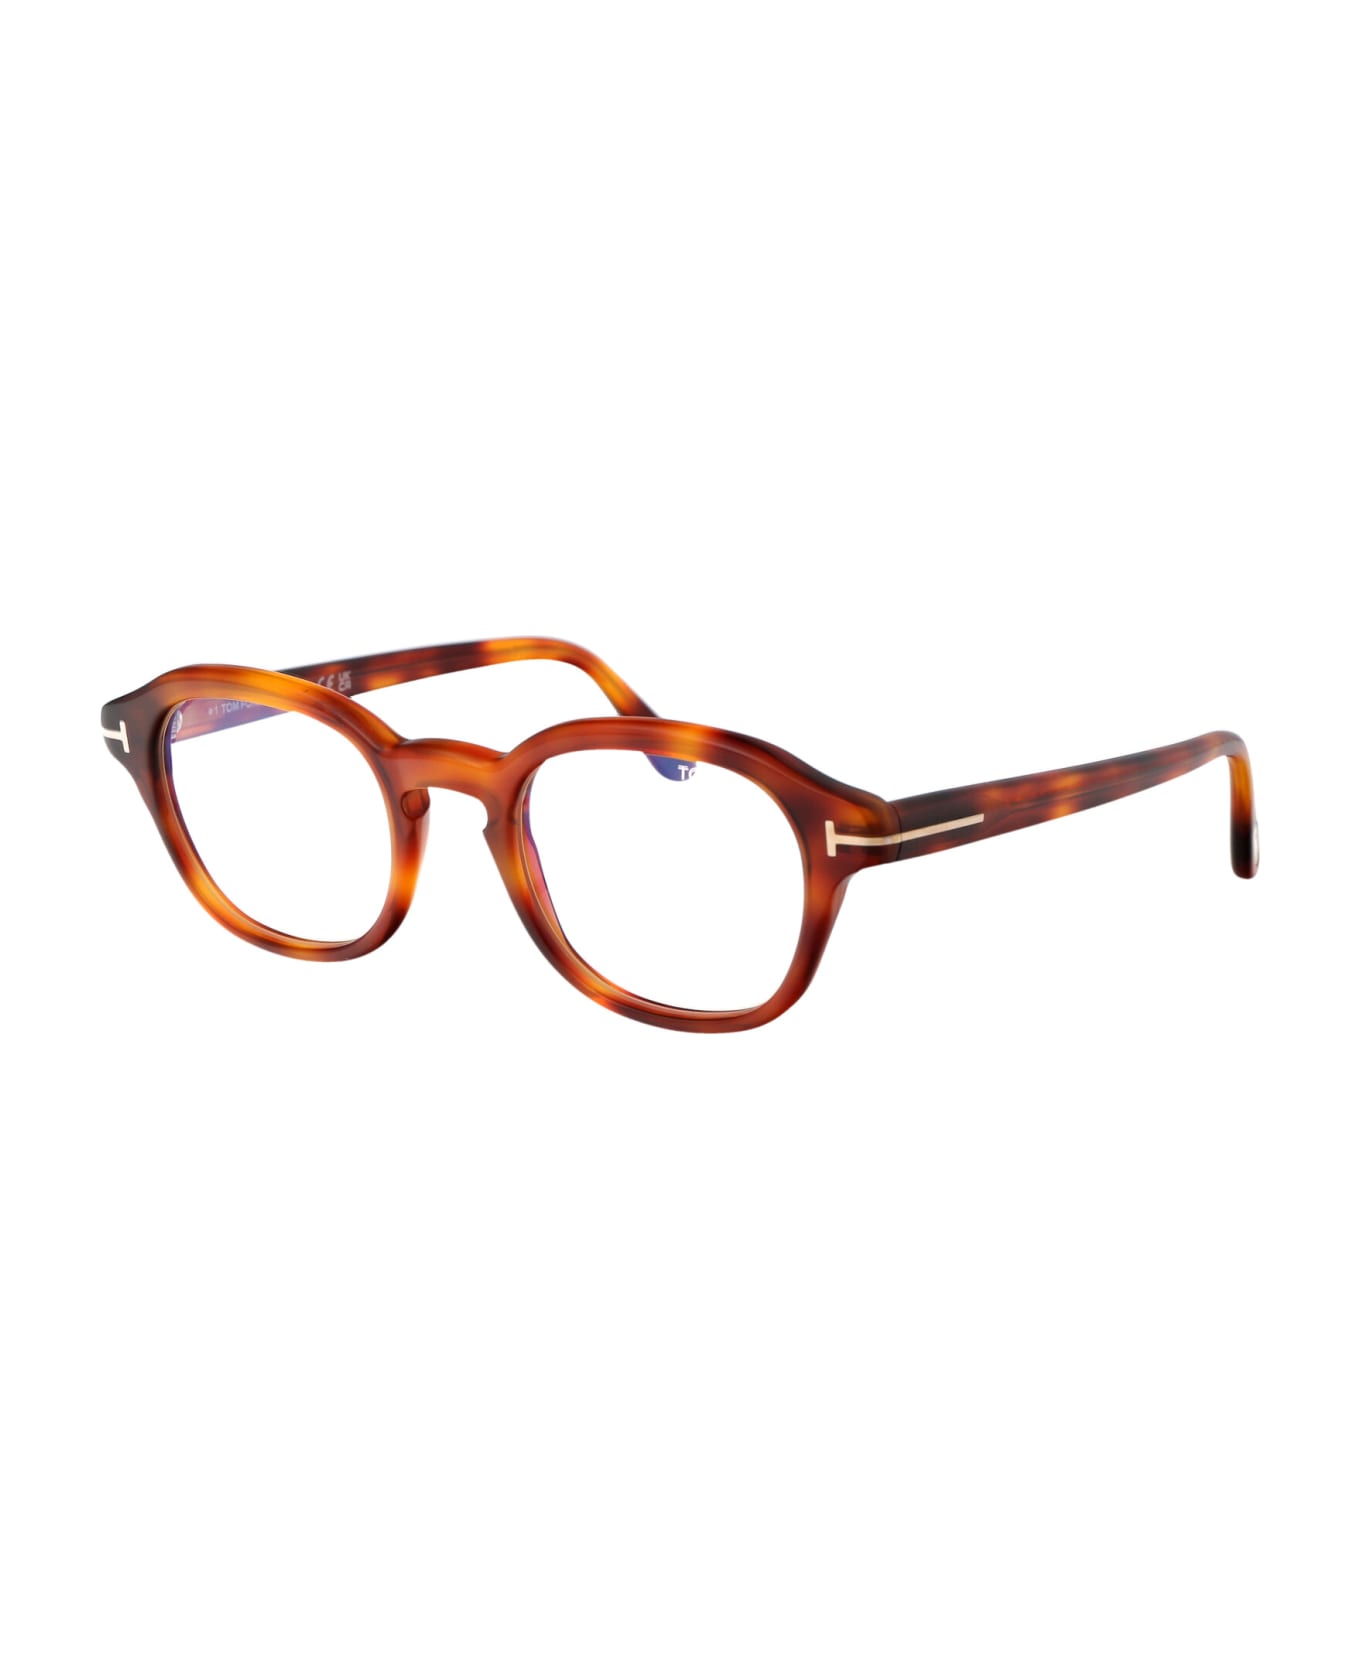 Tom Ford Eyewear Ft5871-b Glasses - 053 Avana Bionda